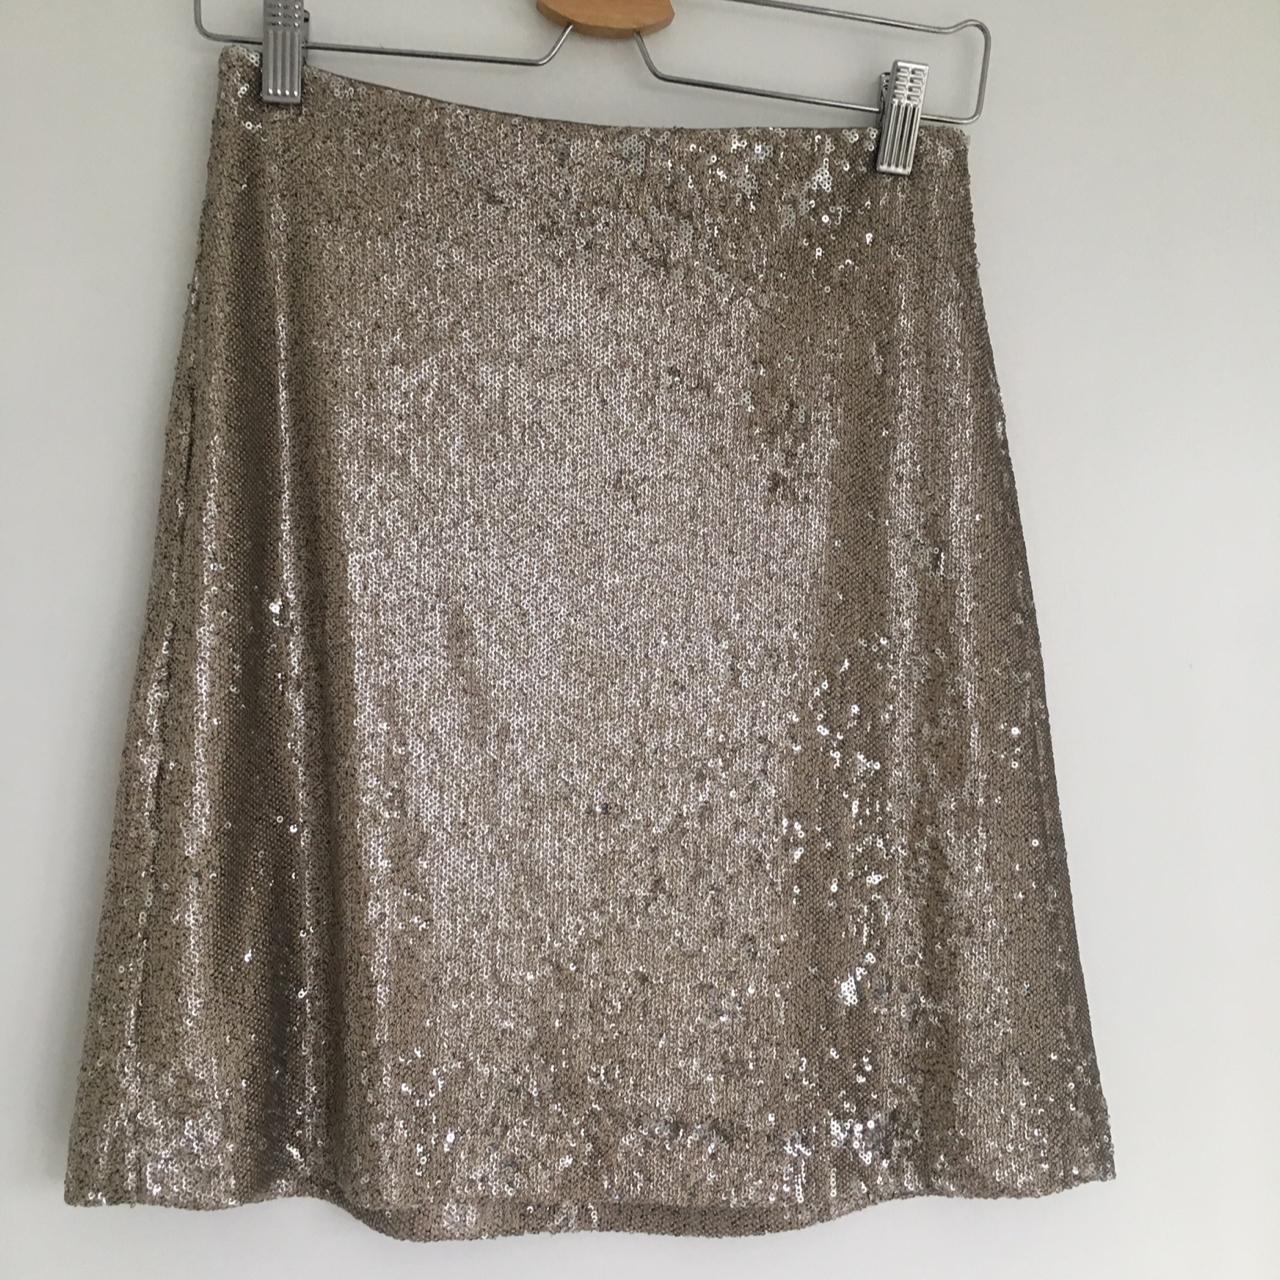 Zara gold sequin mini skirt. - Depop